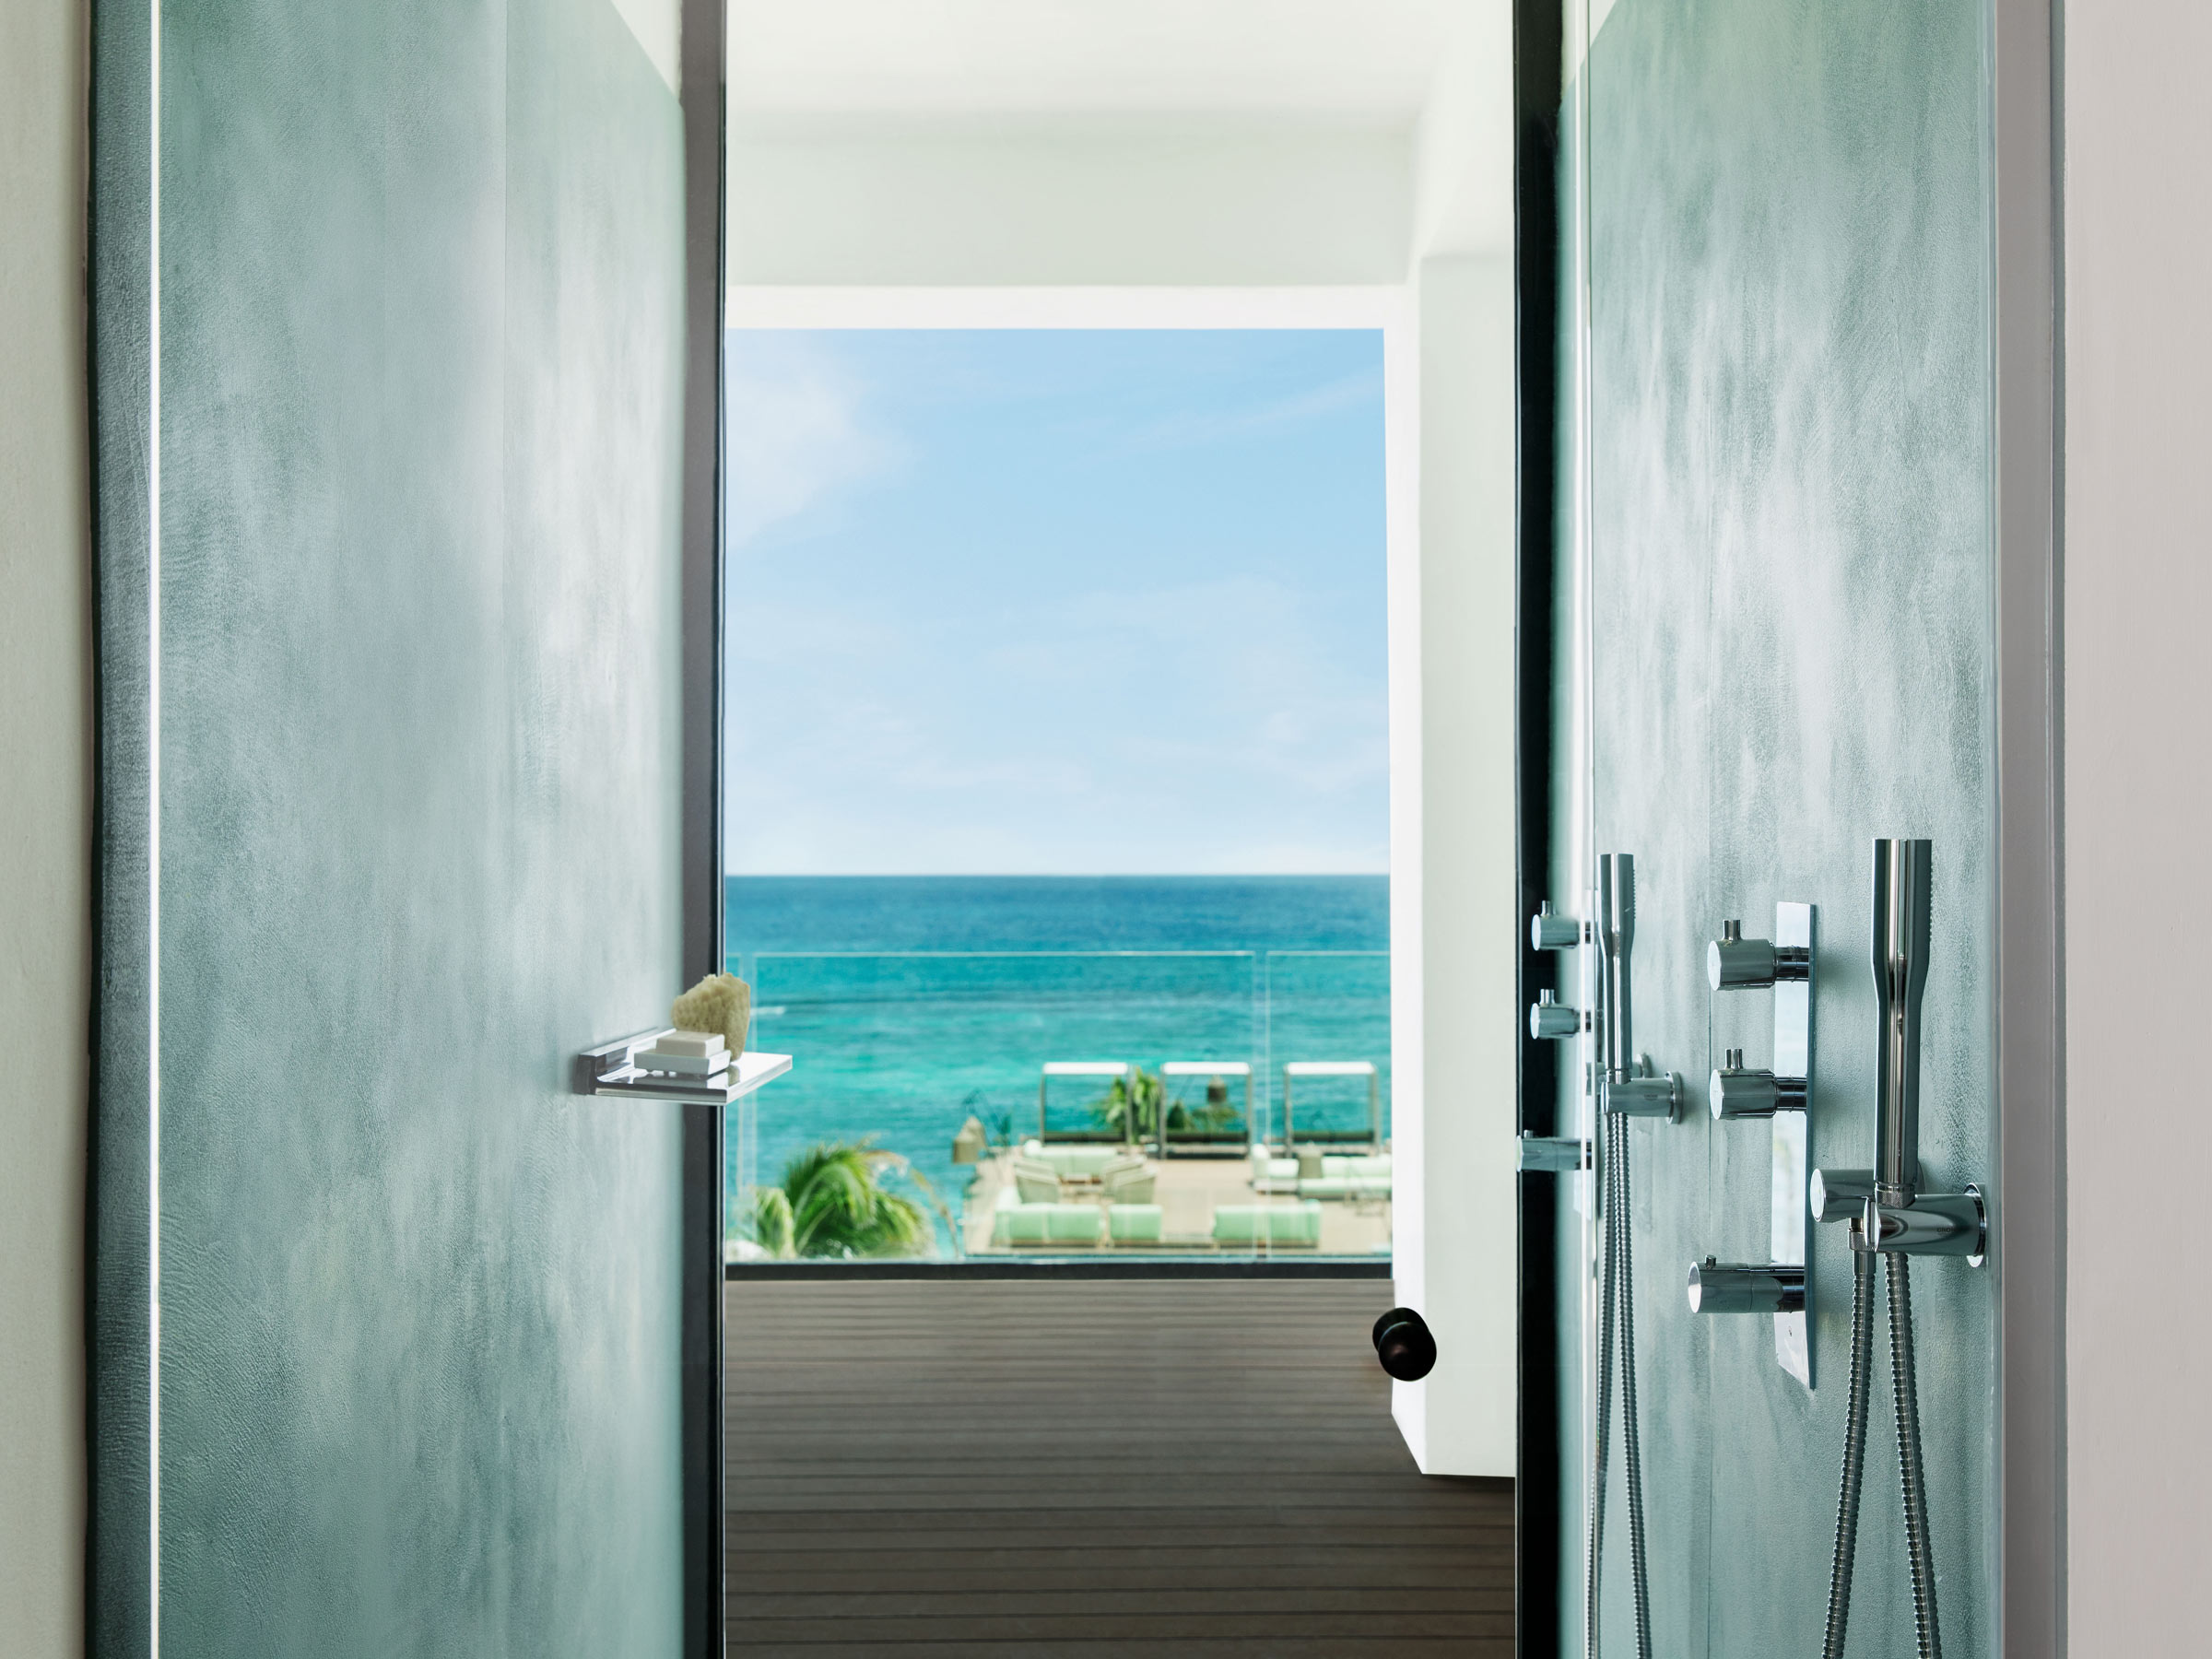 Luxury Suite with Ocean Views in Jamaica